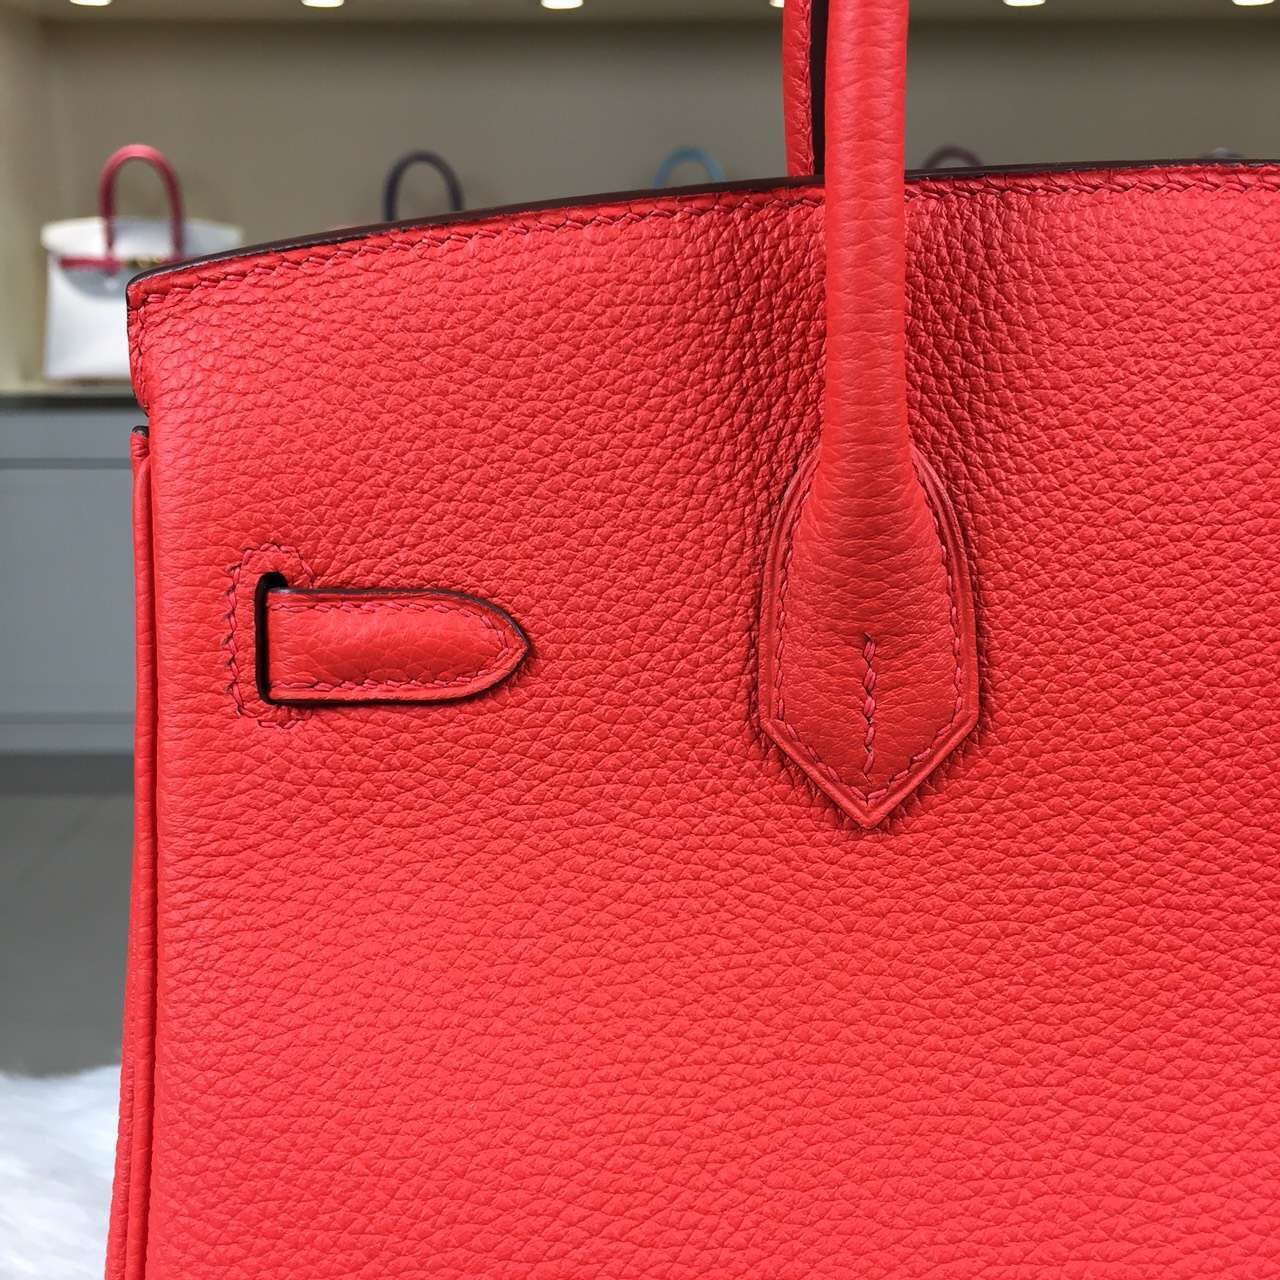 New Pretty Hermes German Calfskin Leather Birkin Bag25cm Flame Red